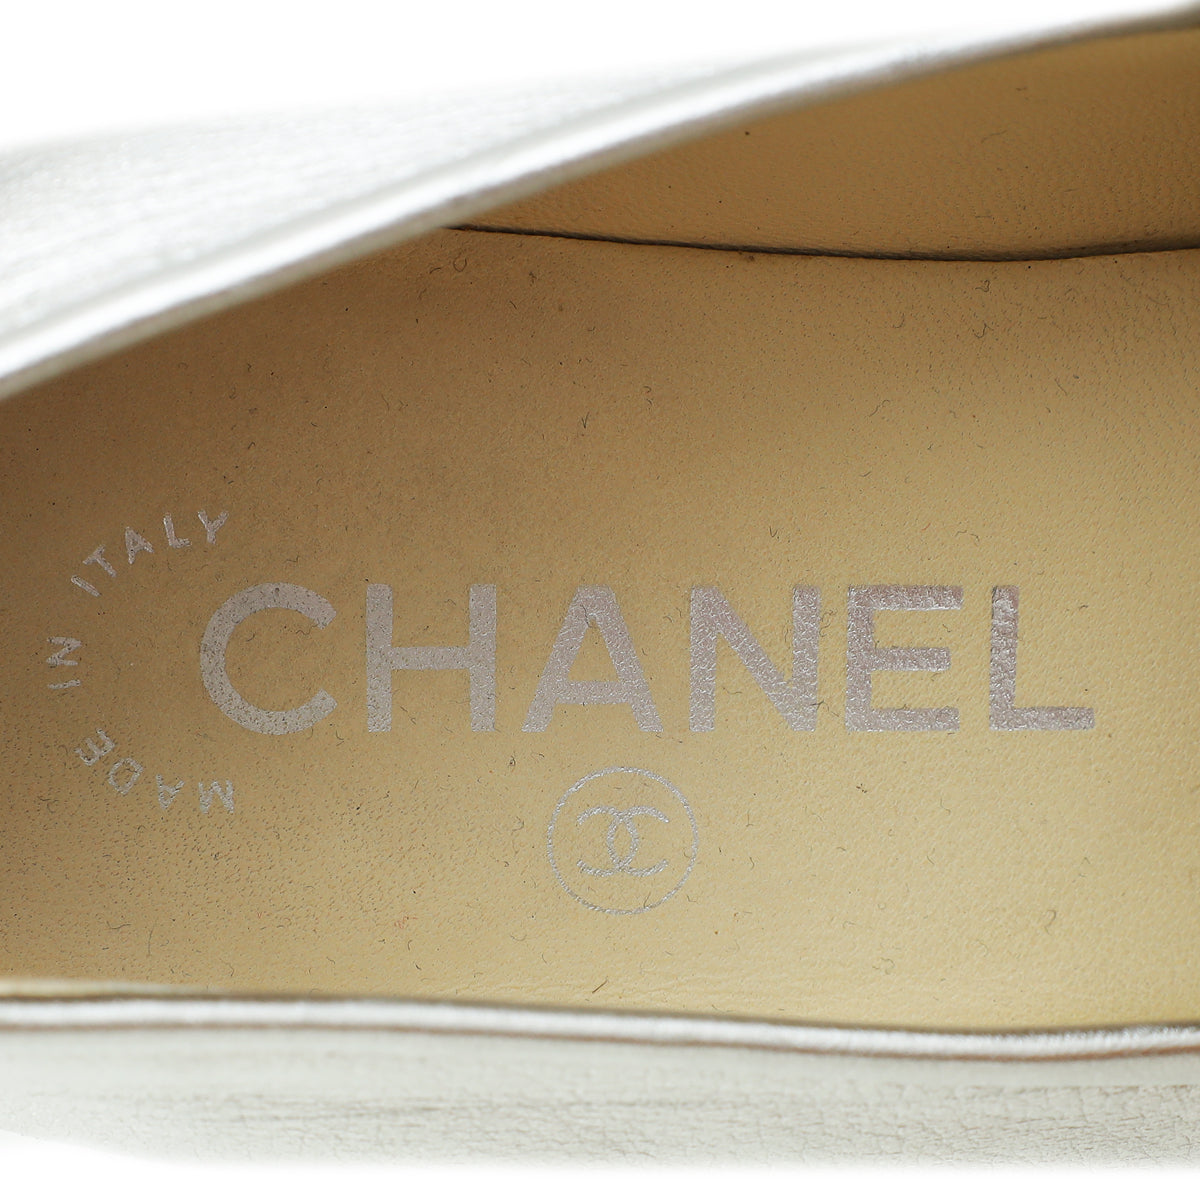 Chanel Silver CC Flat Espadrille 35.5